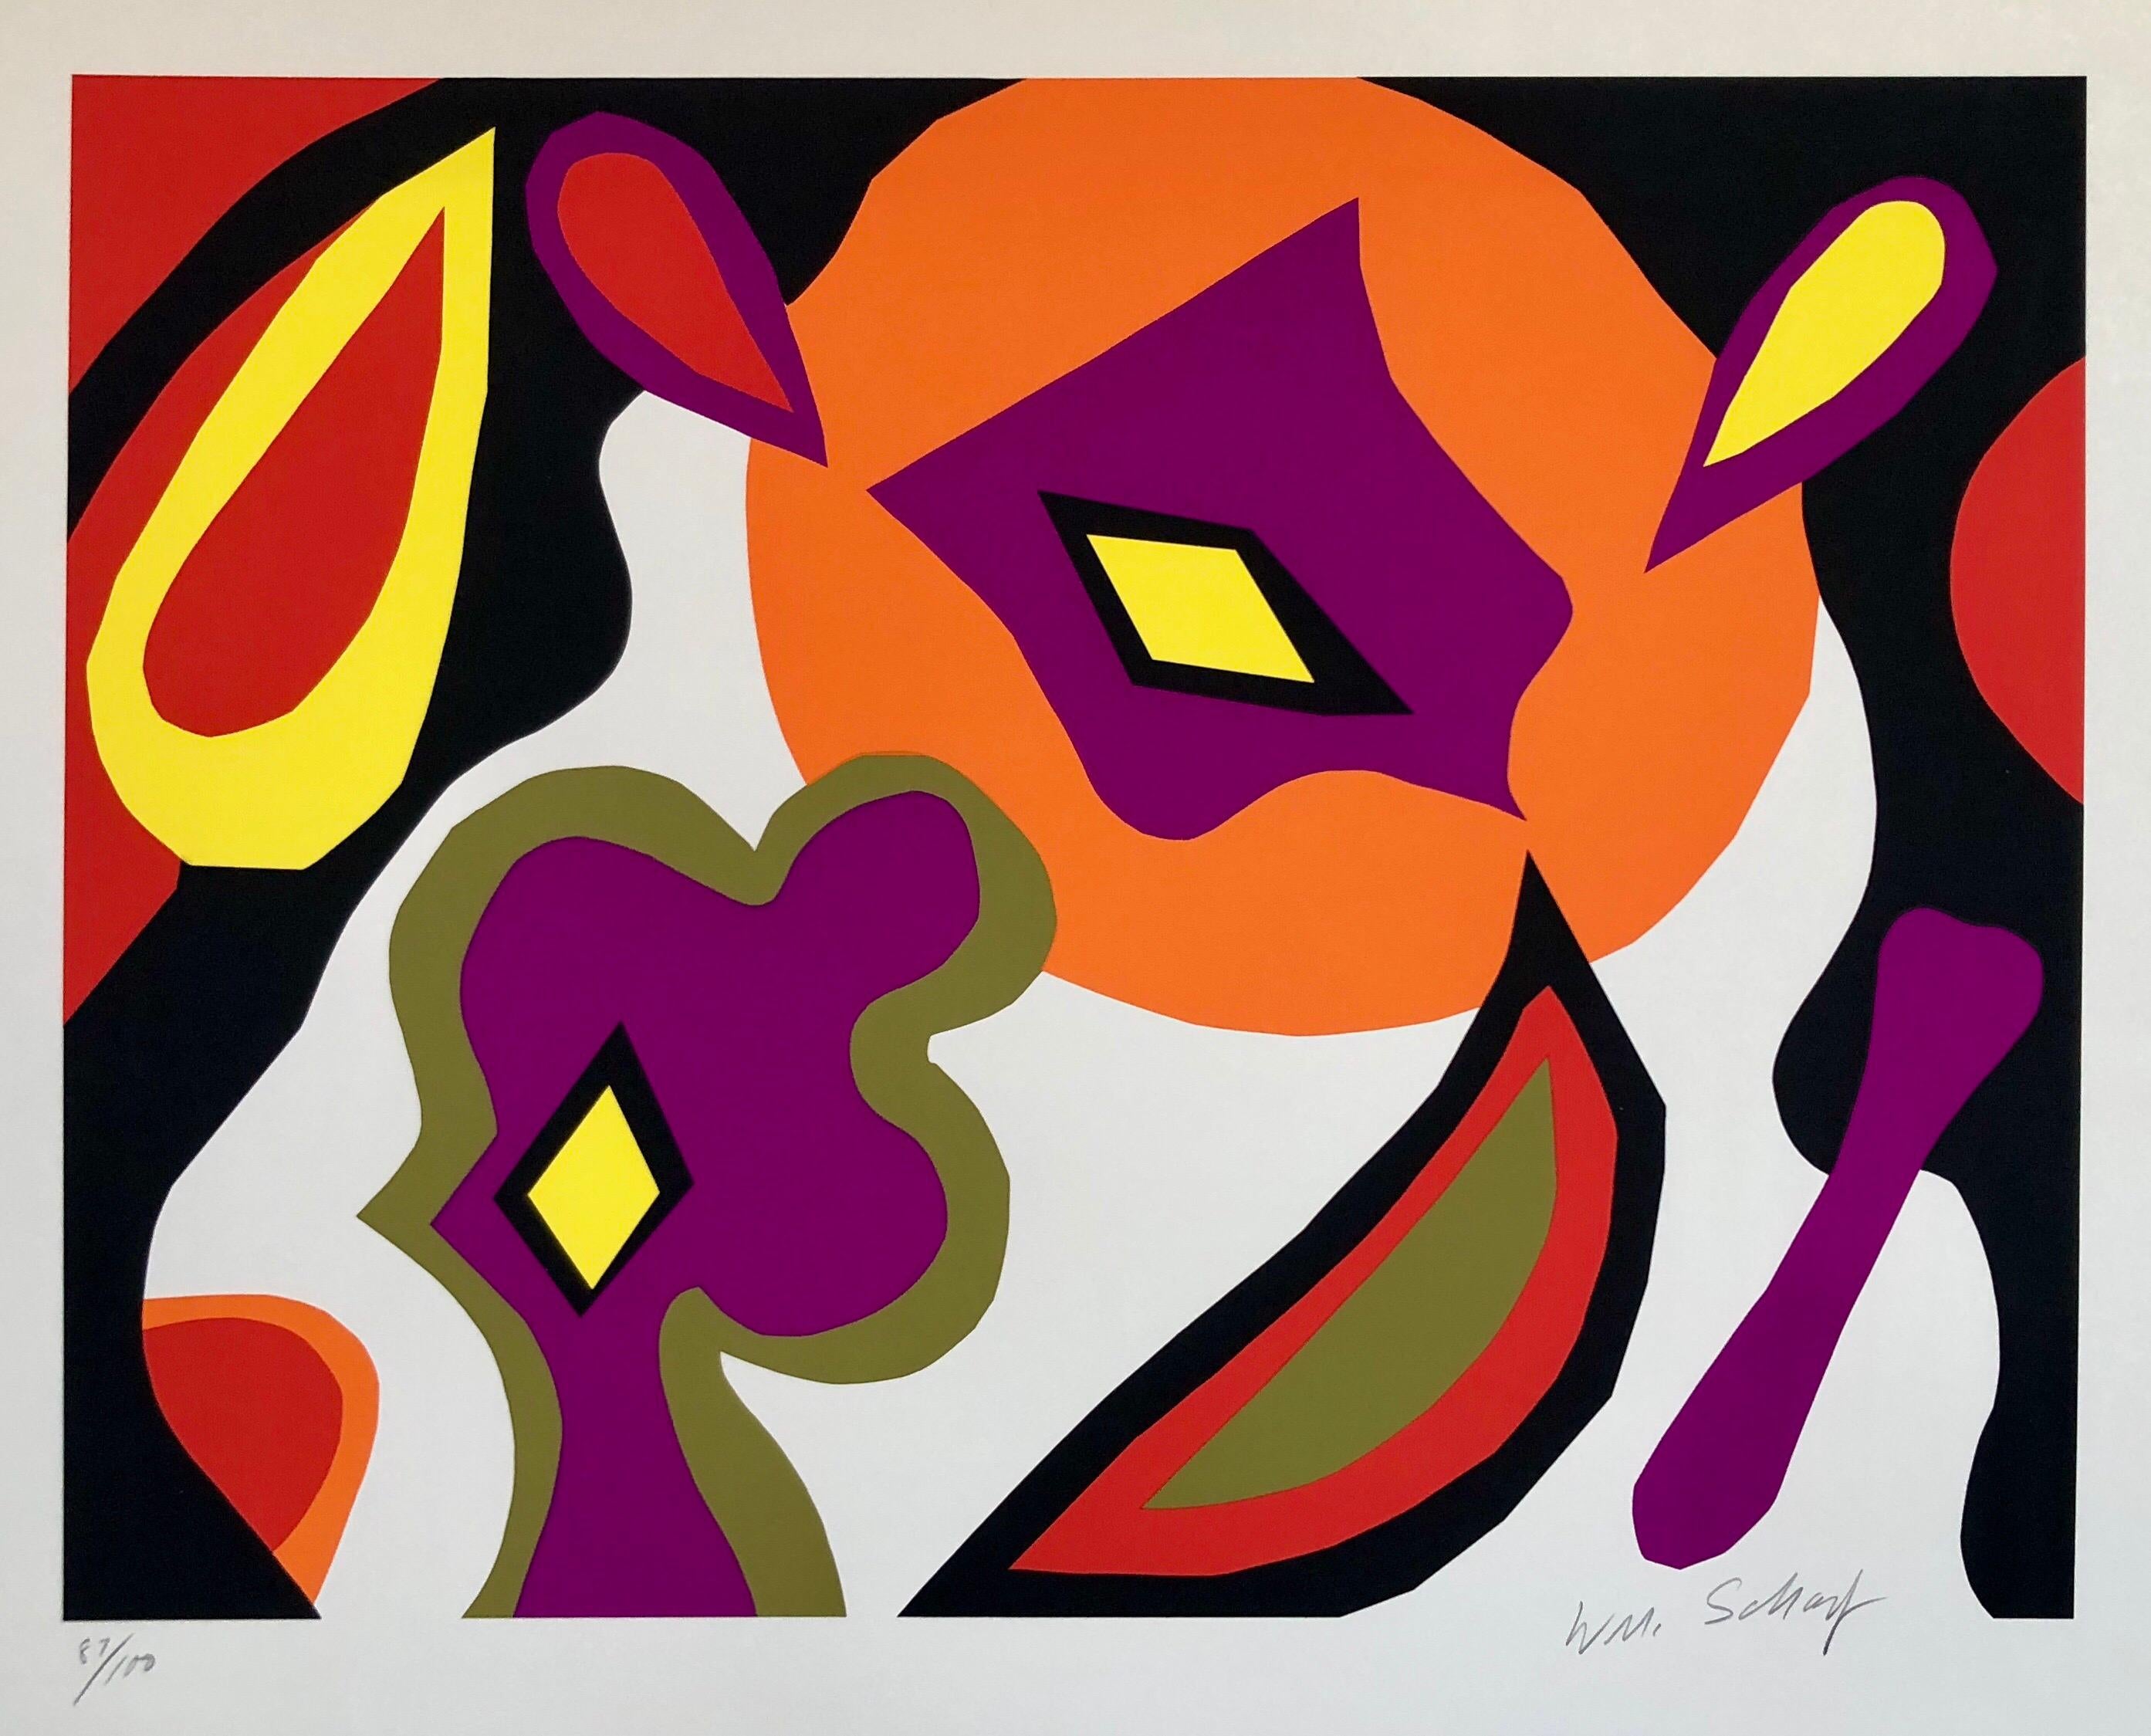 William Scharf Print - Bright Vibrant Pop Art Silkscreen NYC Abstract Expressionist